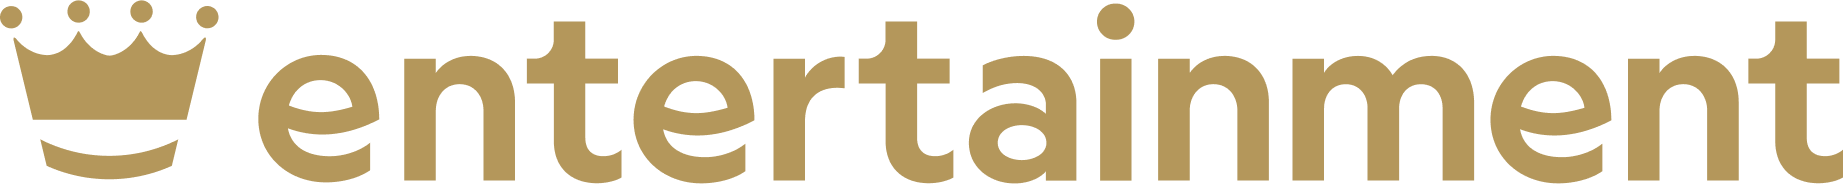 ent-logo-gold-flat